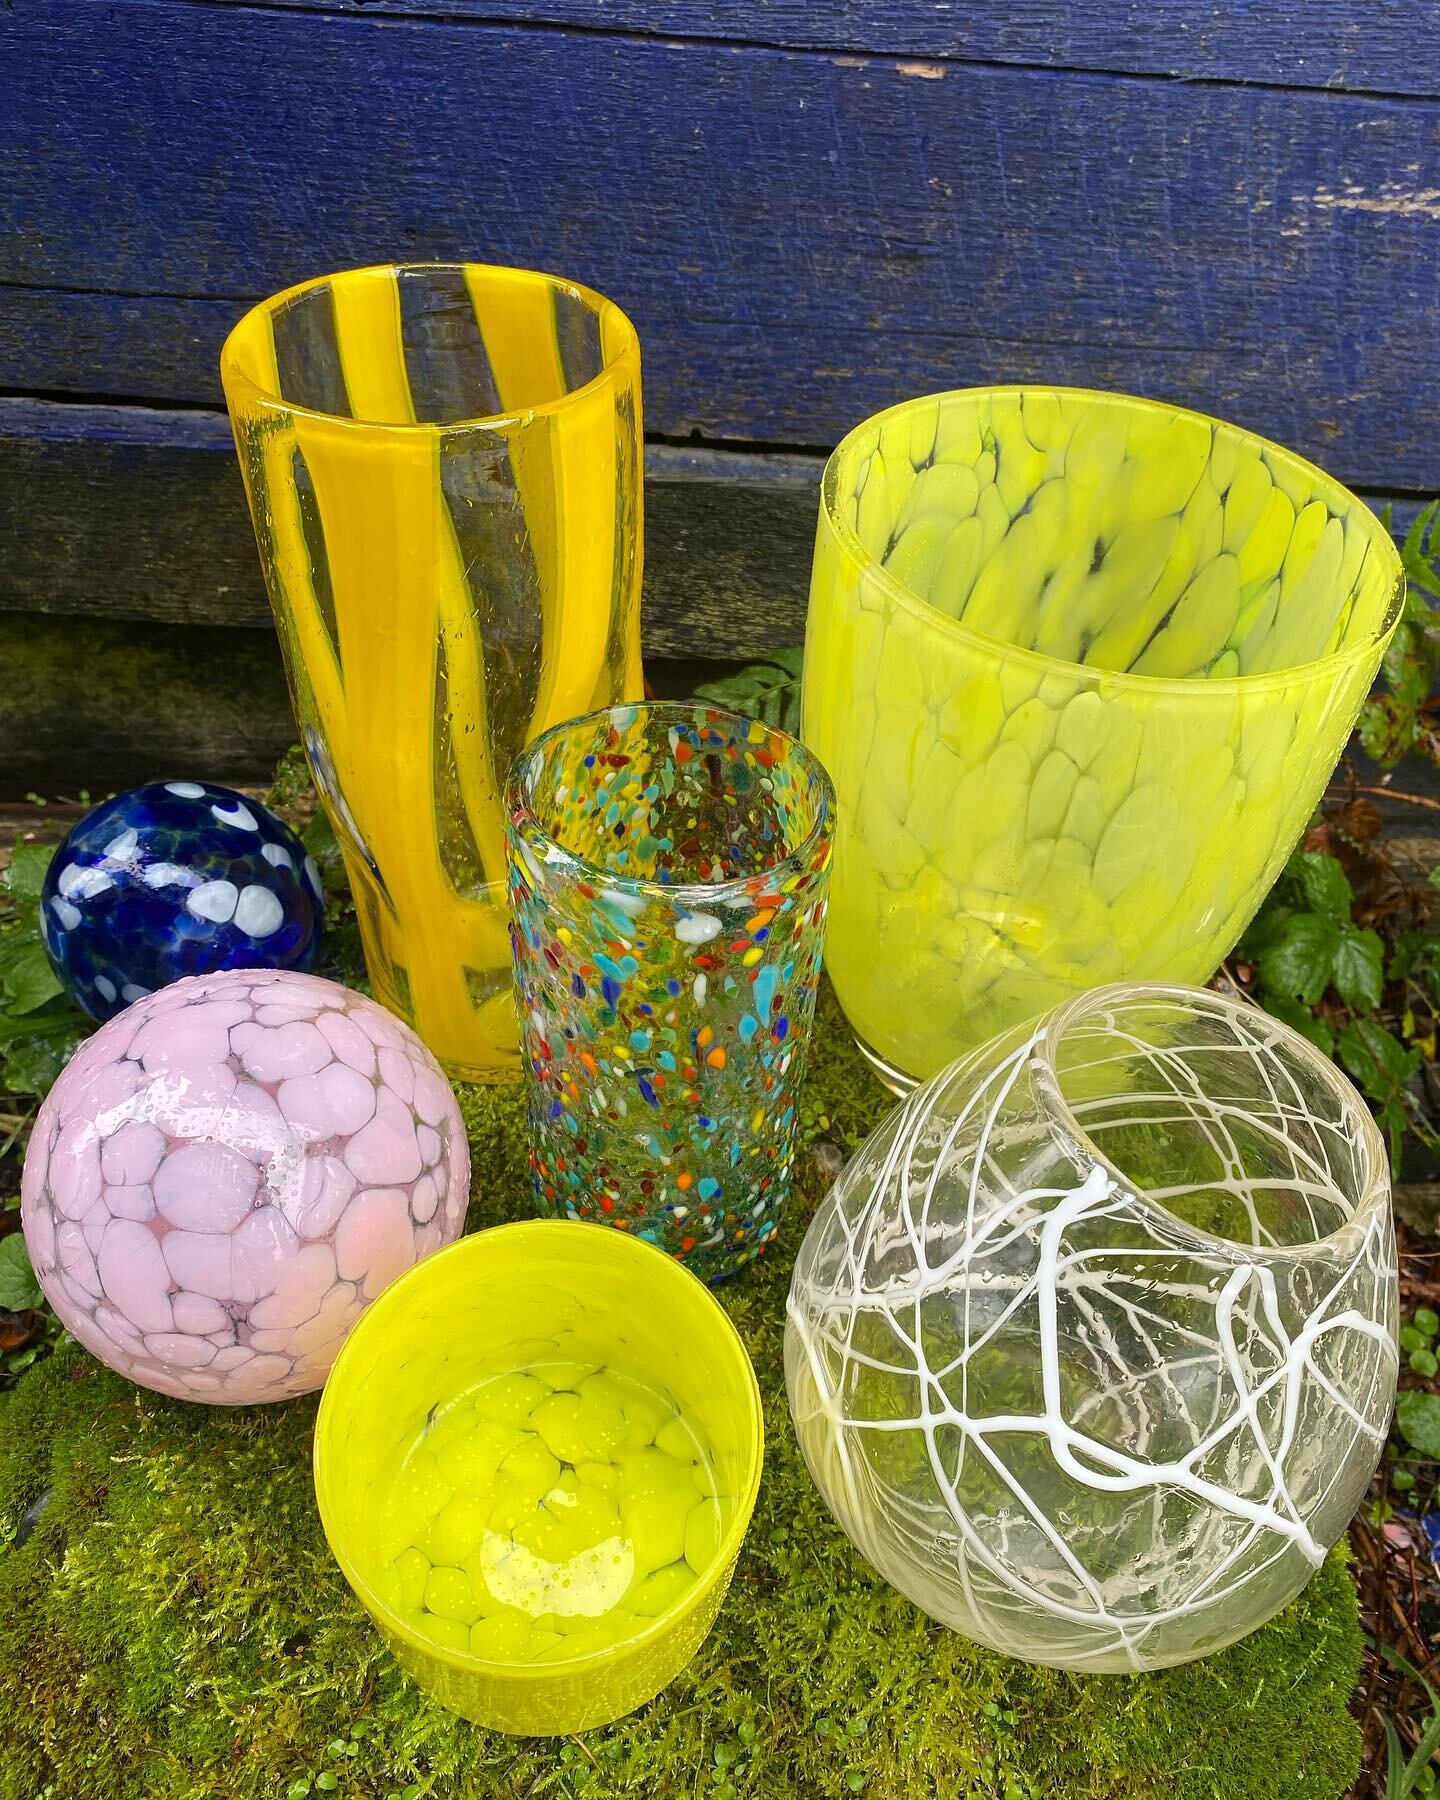 Latest work, texture. Slowly getting bigger. 
.
.
#glassblowing #glassart #glassartist #girlswhoblowglass #makersofinstagram #vase #rainbow #pink #yellow